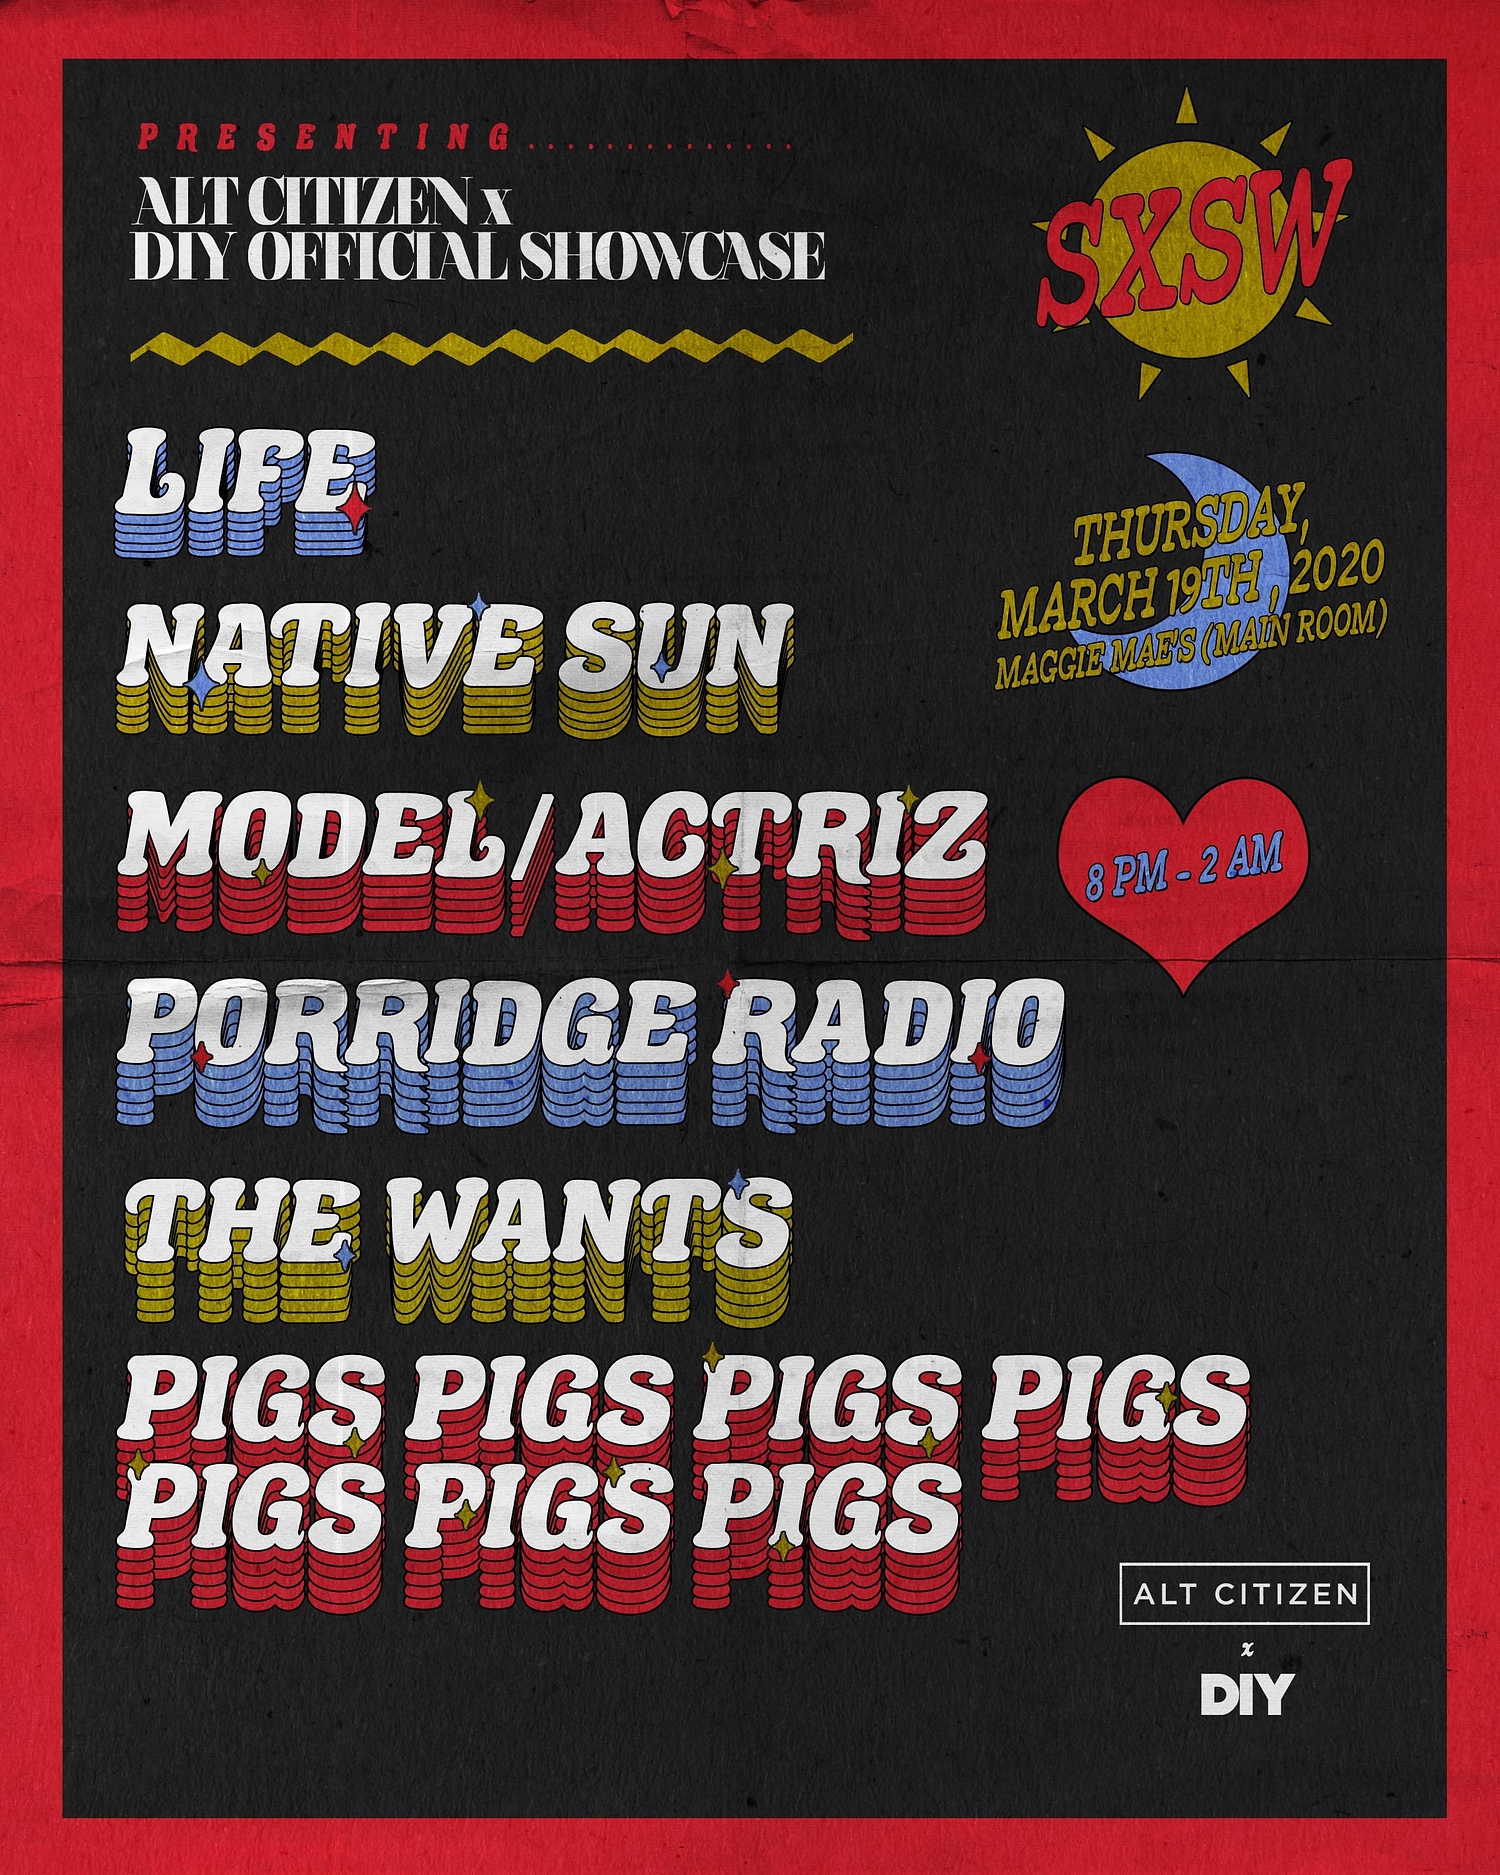 Porridge Radio, Pigs Pigs Pigs Pigs Pigs Pigs Pigs & more to play DIY & Alt Citizen SXSW showcase